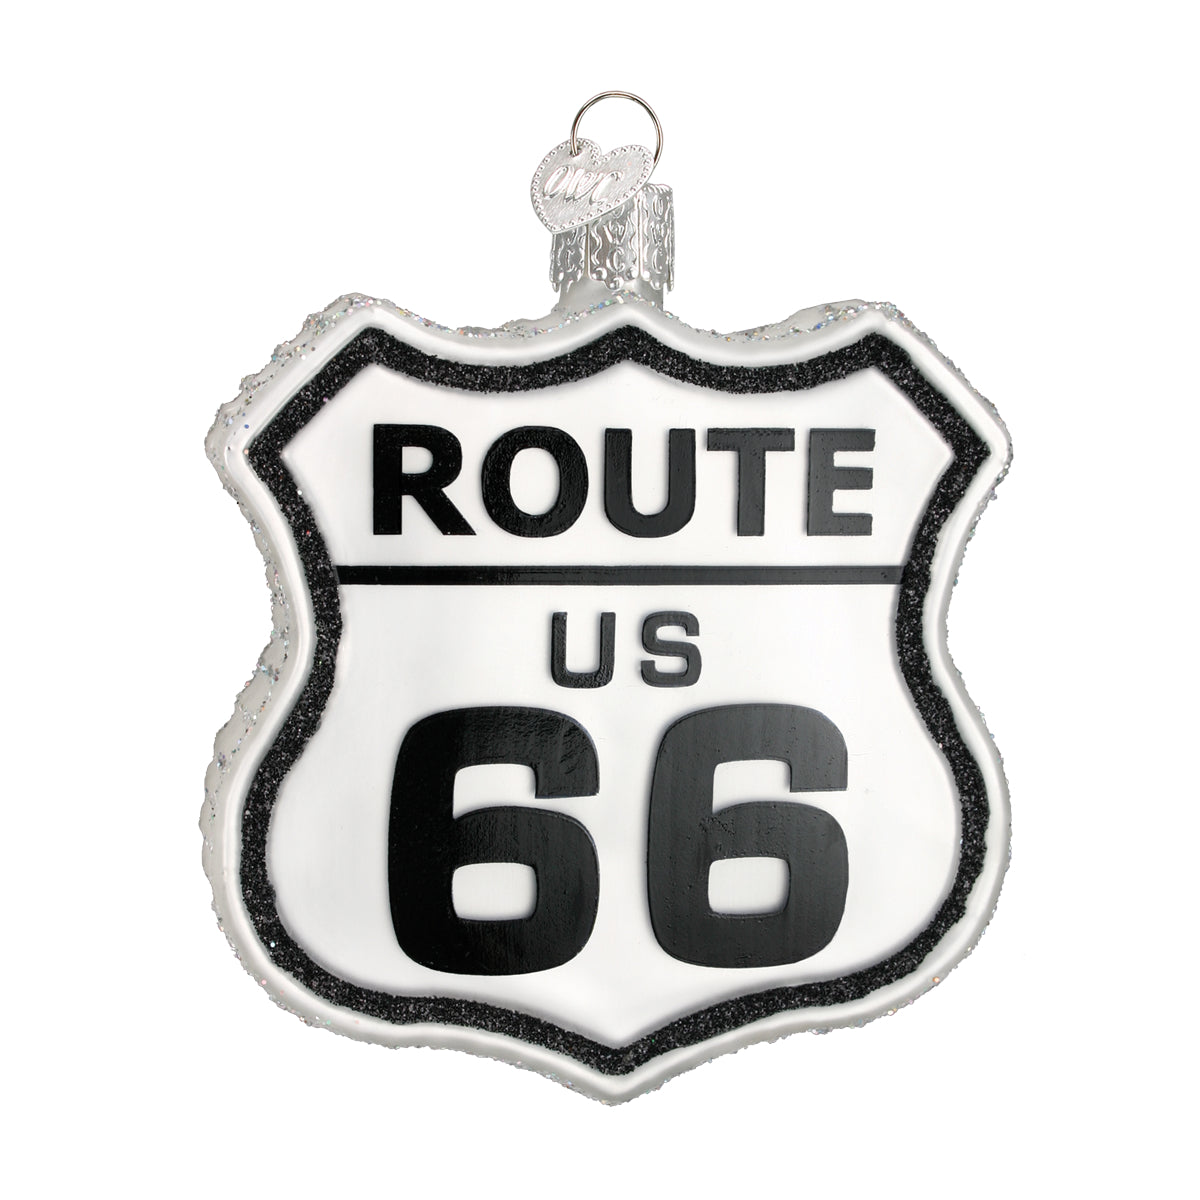 Historic Route Sign Ornament